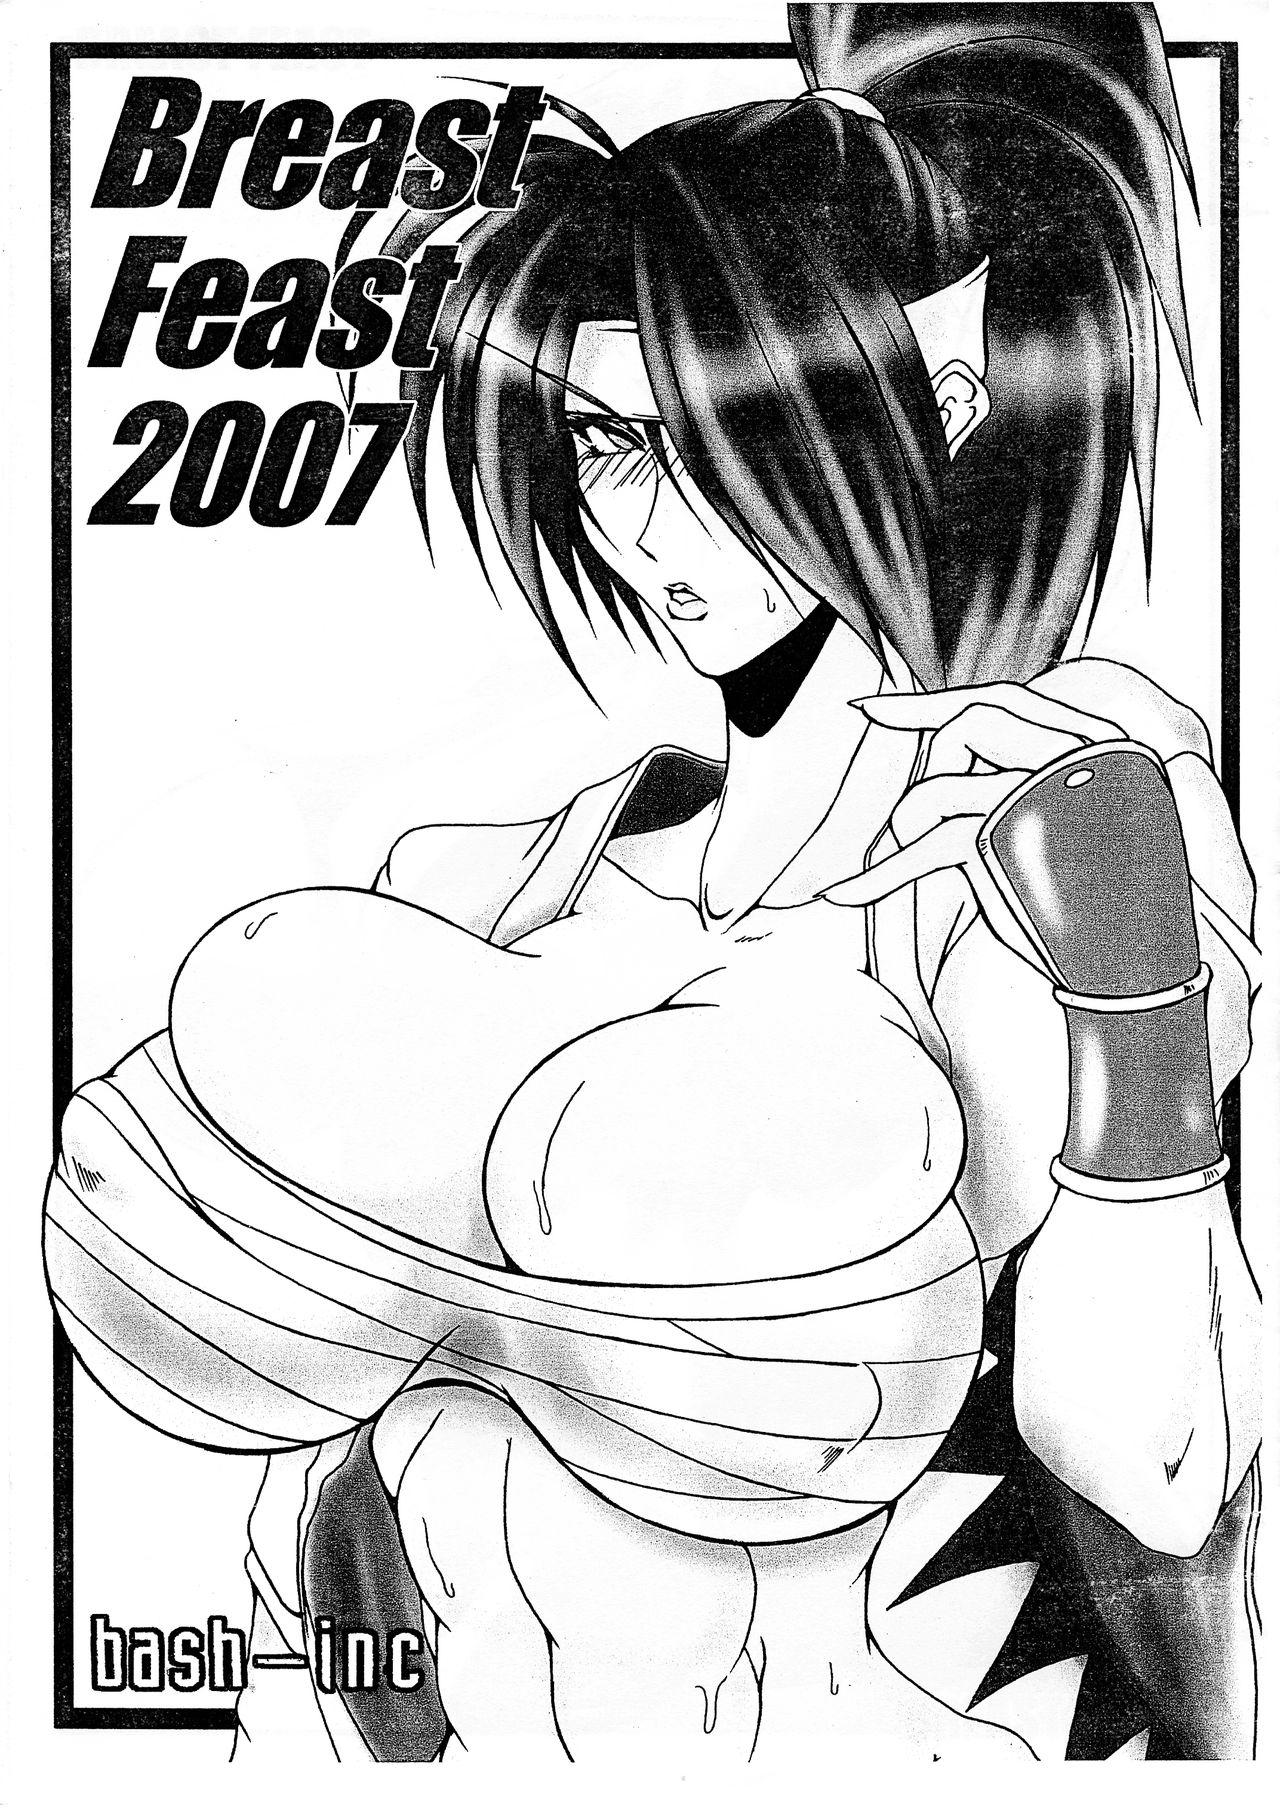 Breast Feast 2007 1